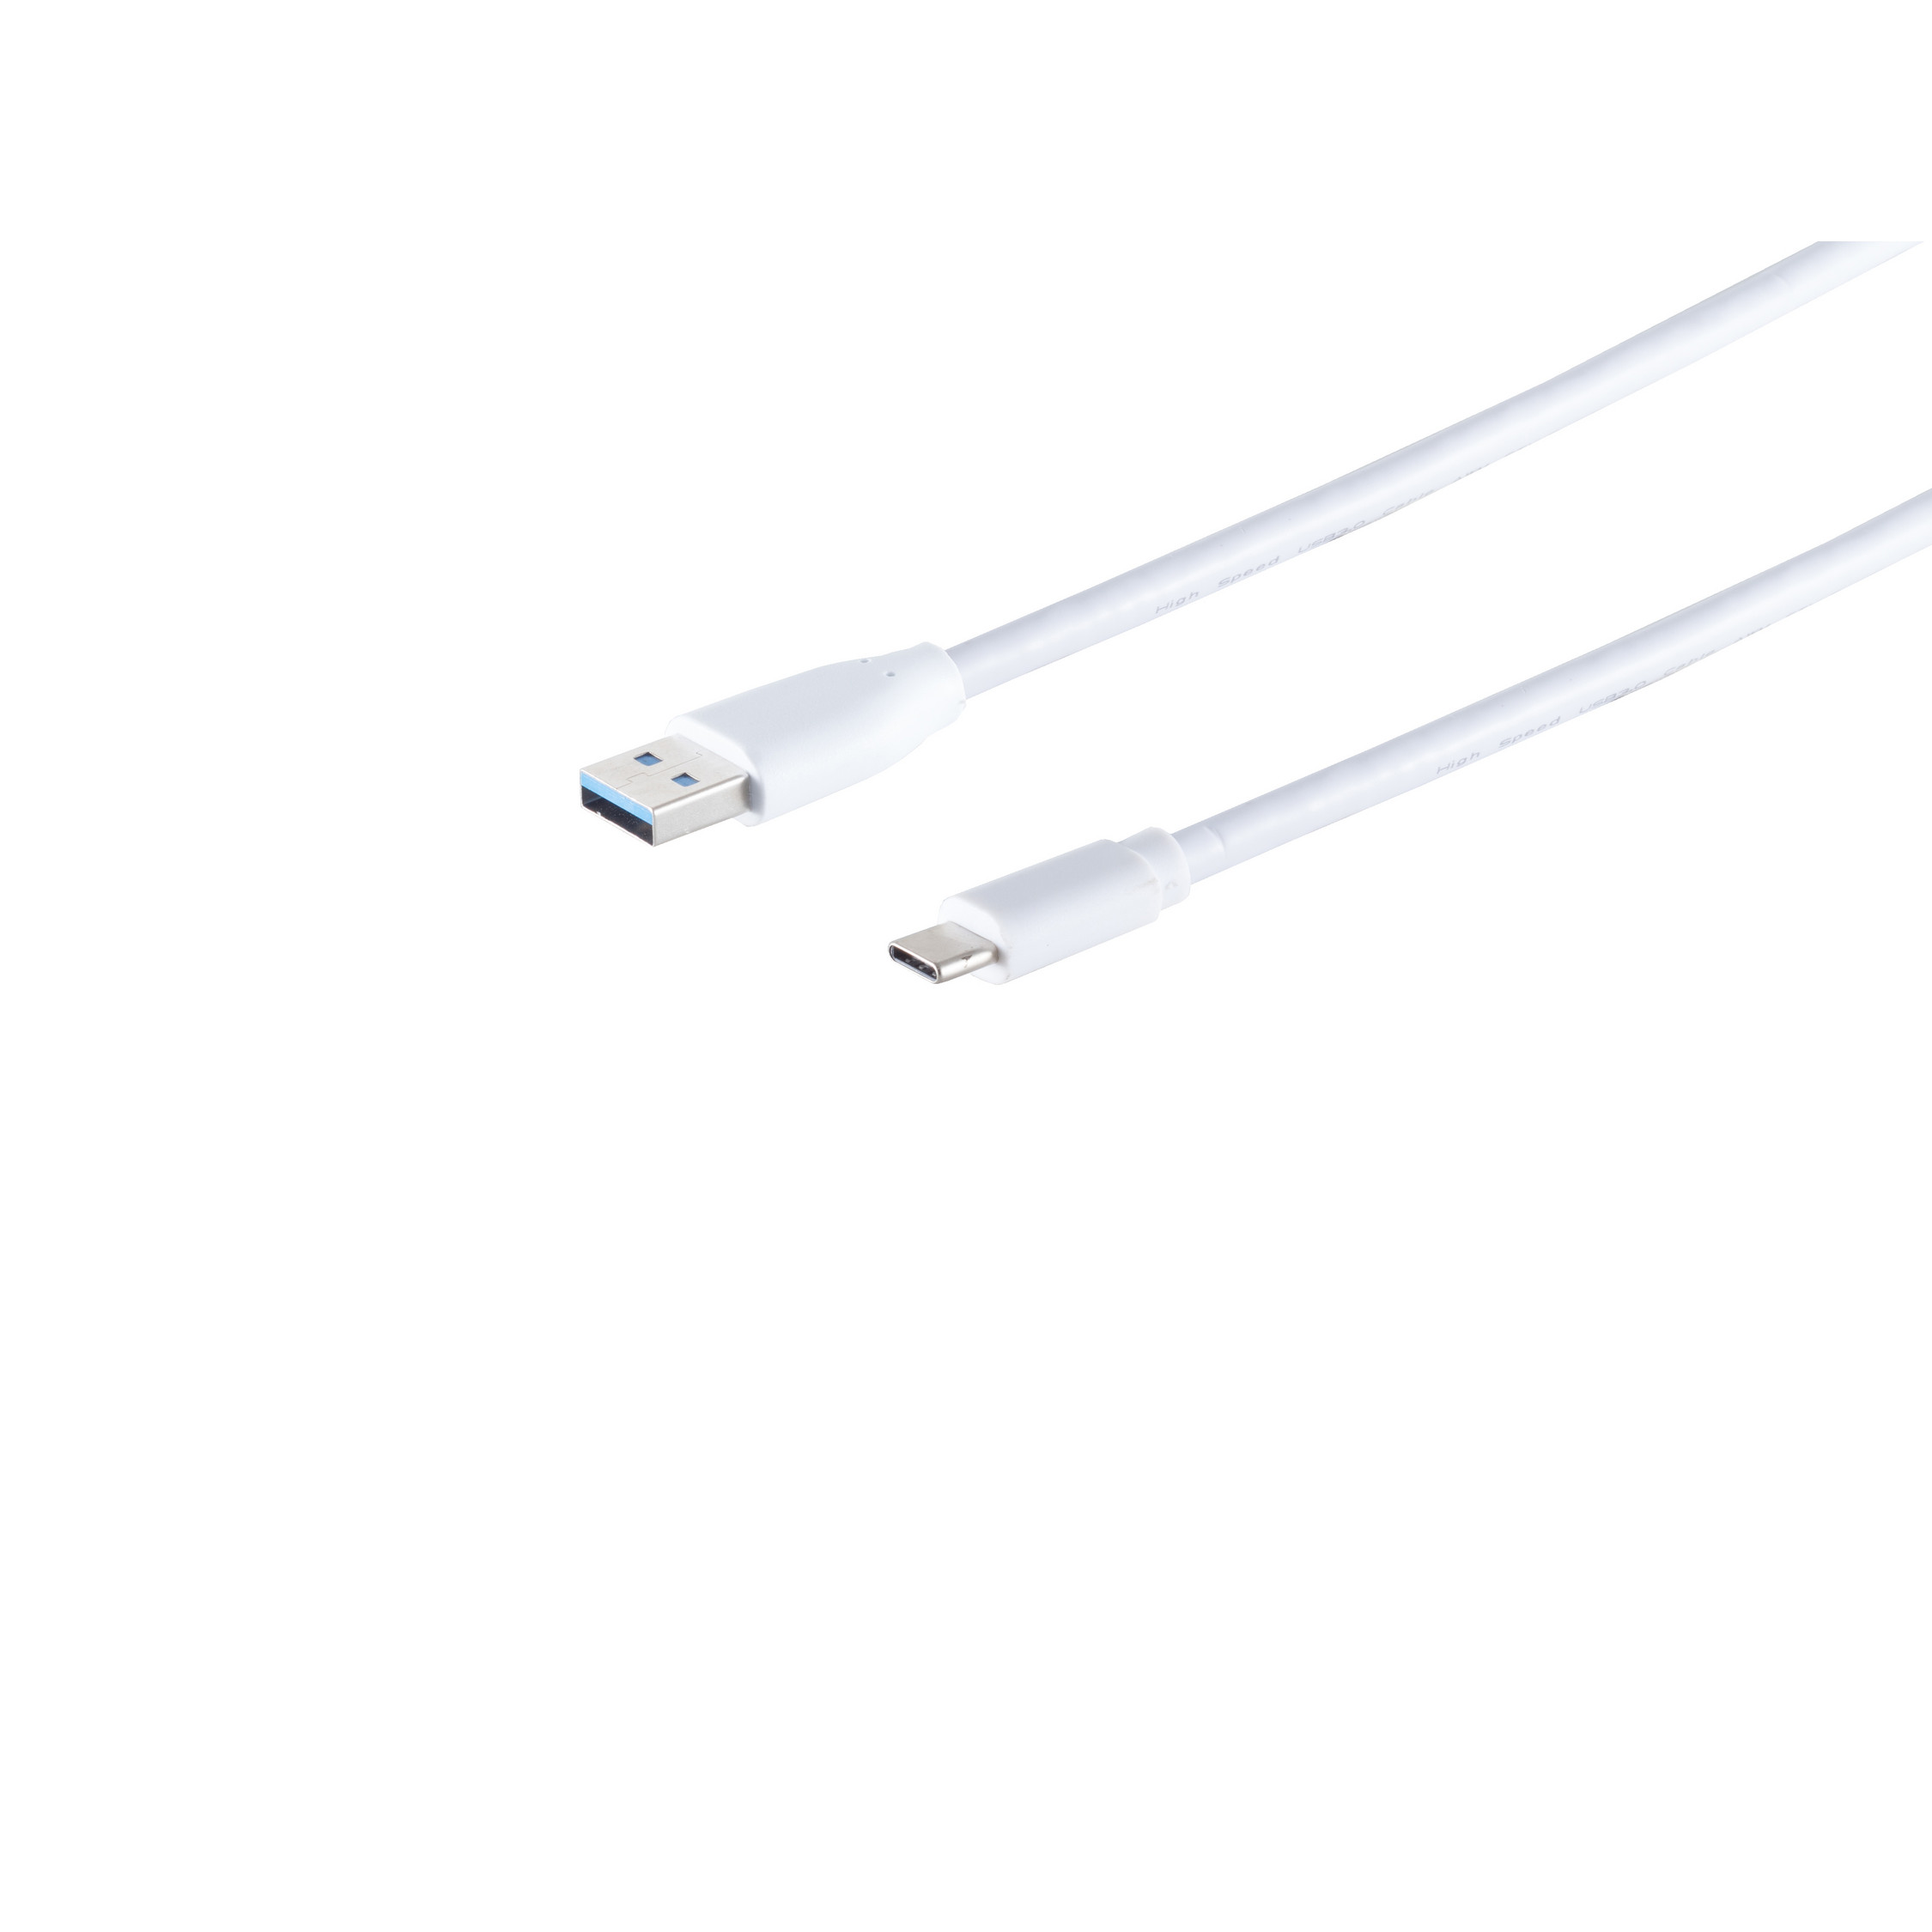 S/CONN -USB USB Kabel C 3.0 MAXIMUM weiß USB 3.1 A Stecker 3m CONNECTIVITY Kabel Stecker